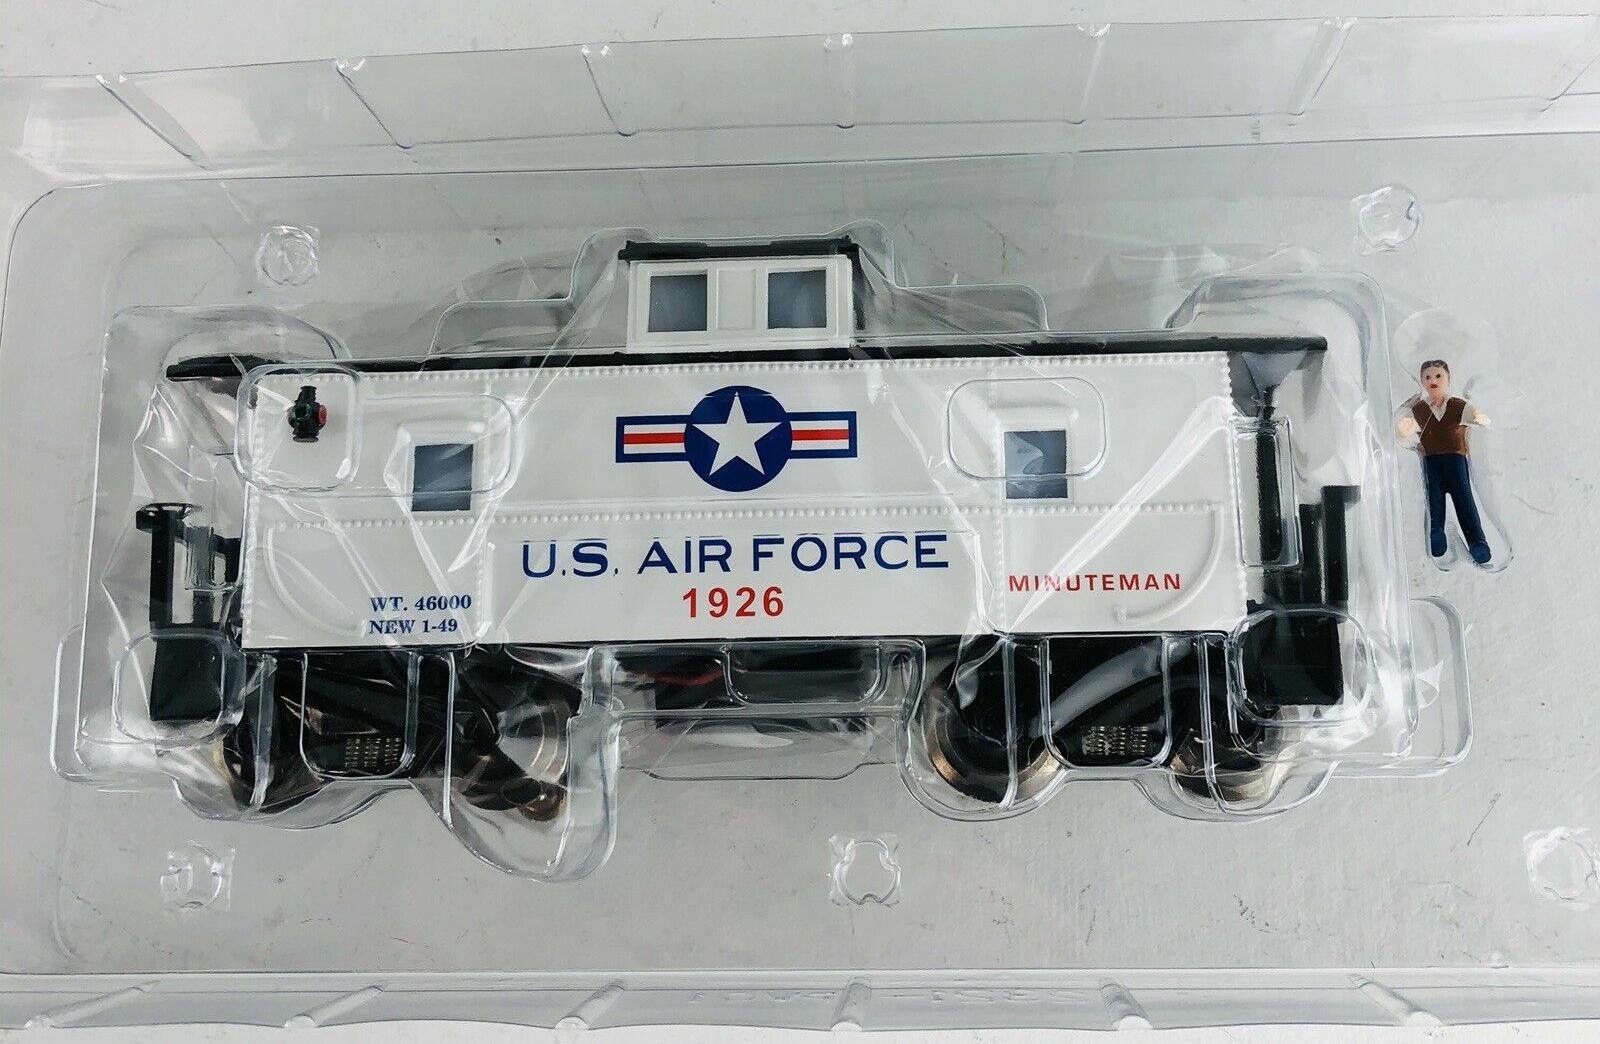 USAF Minuteman American Railroad Caboose image